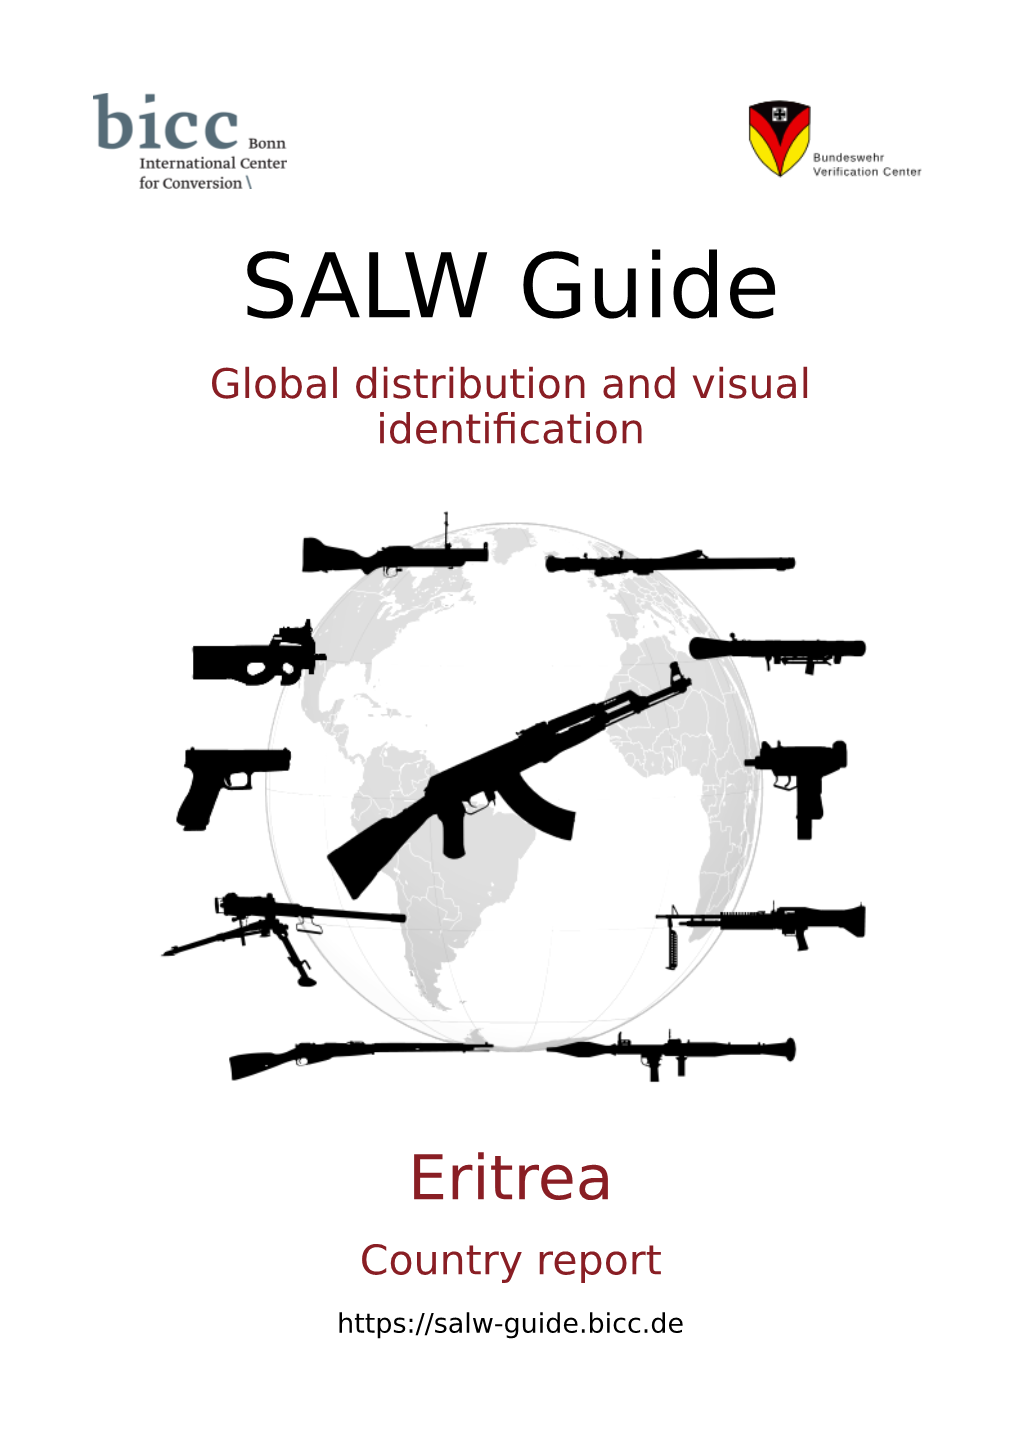 Eritrea Country Report